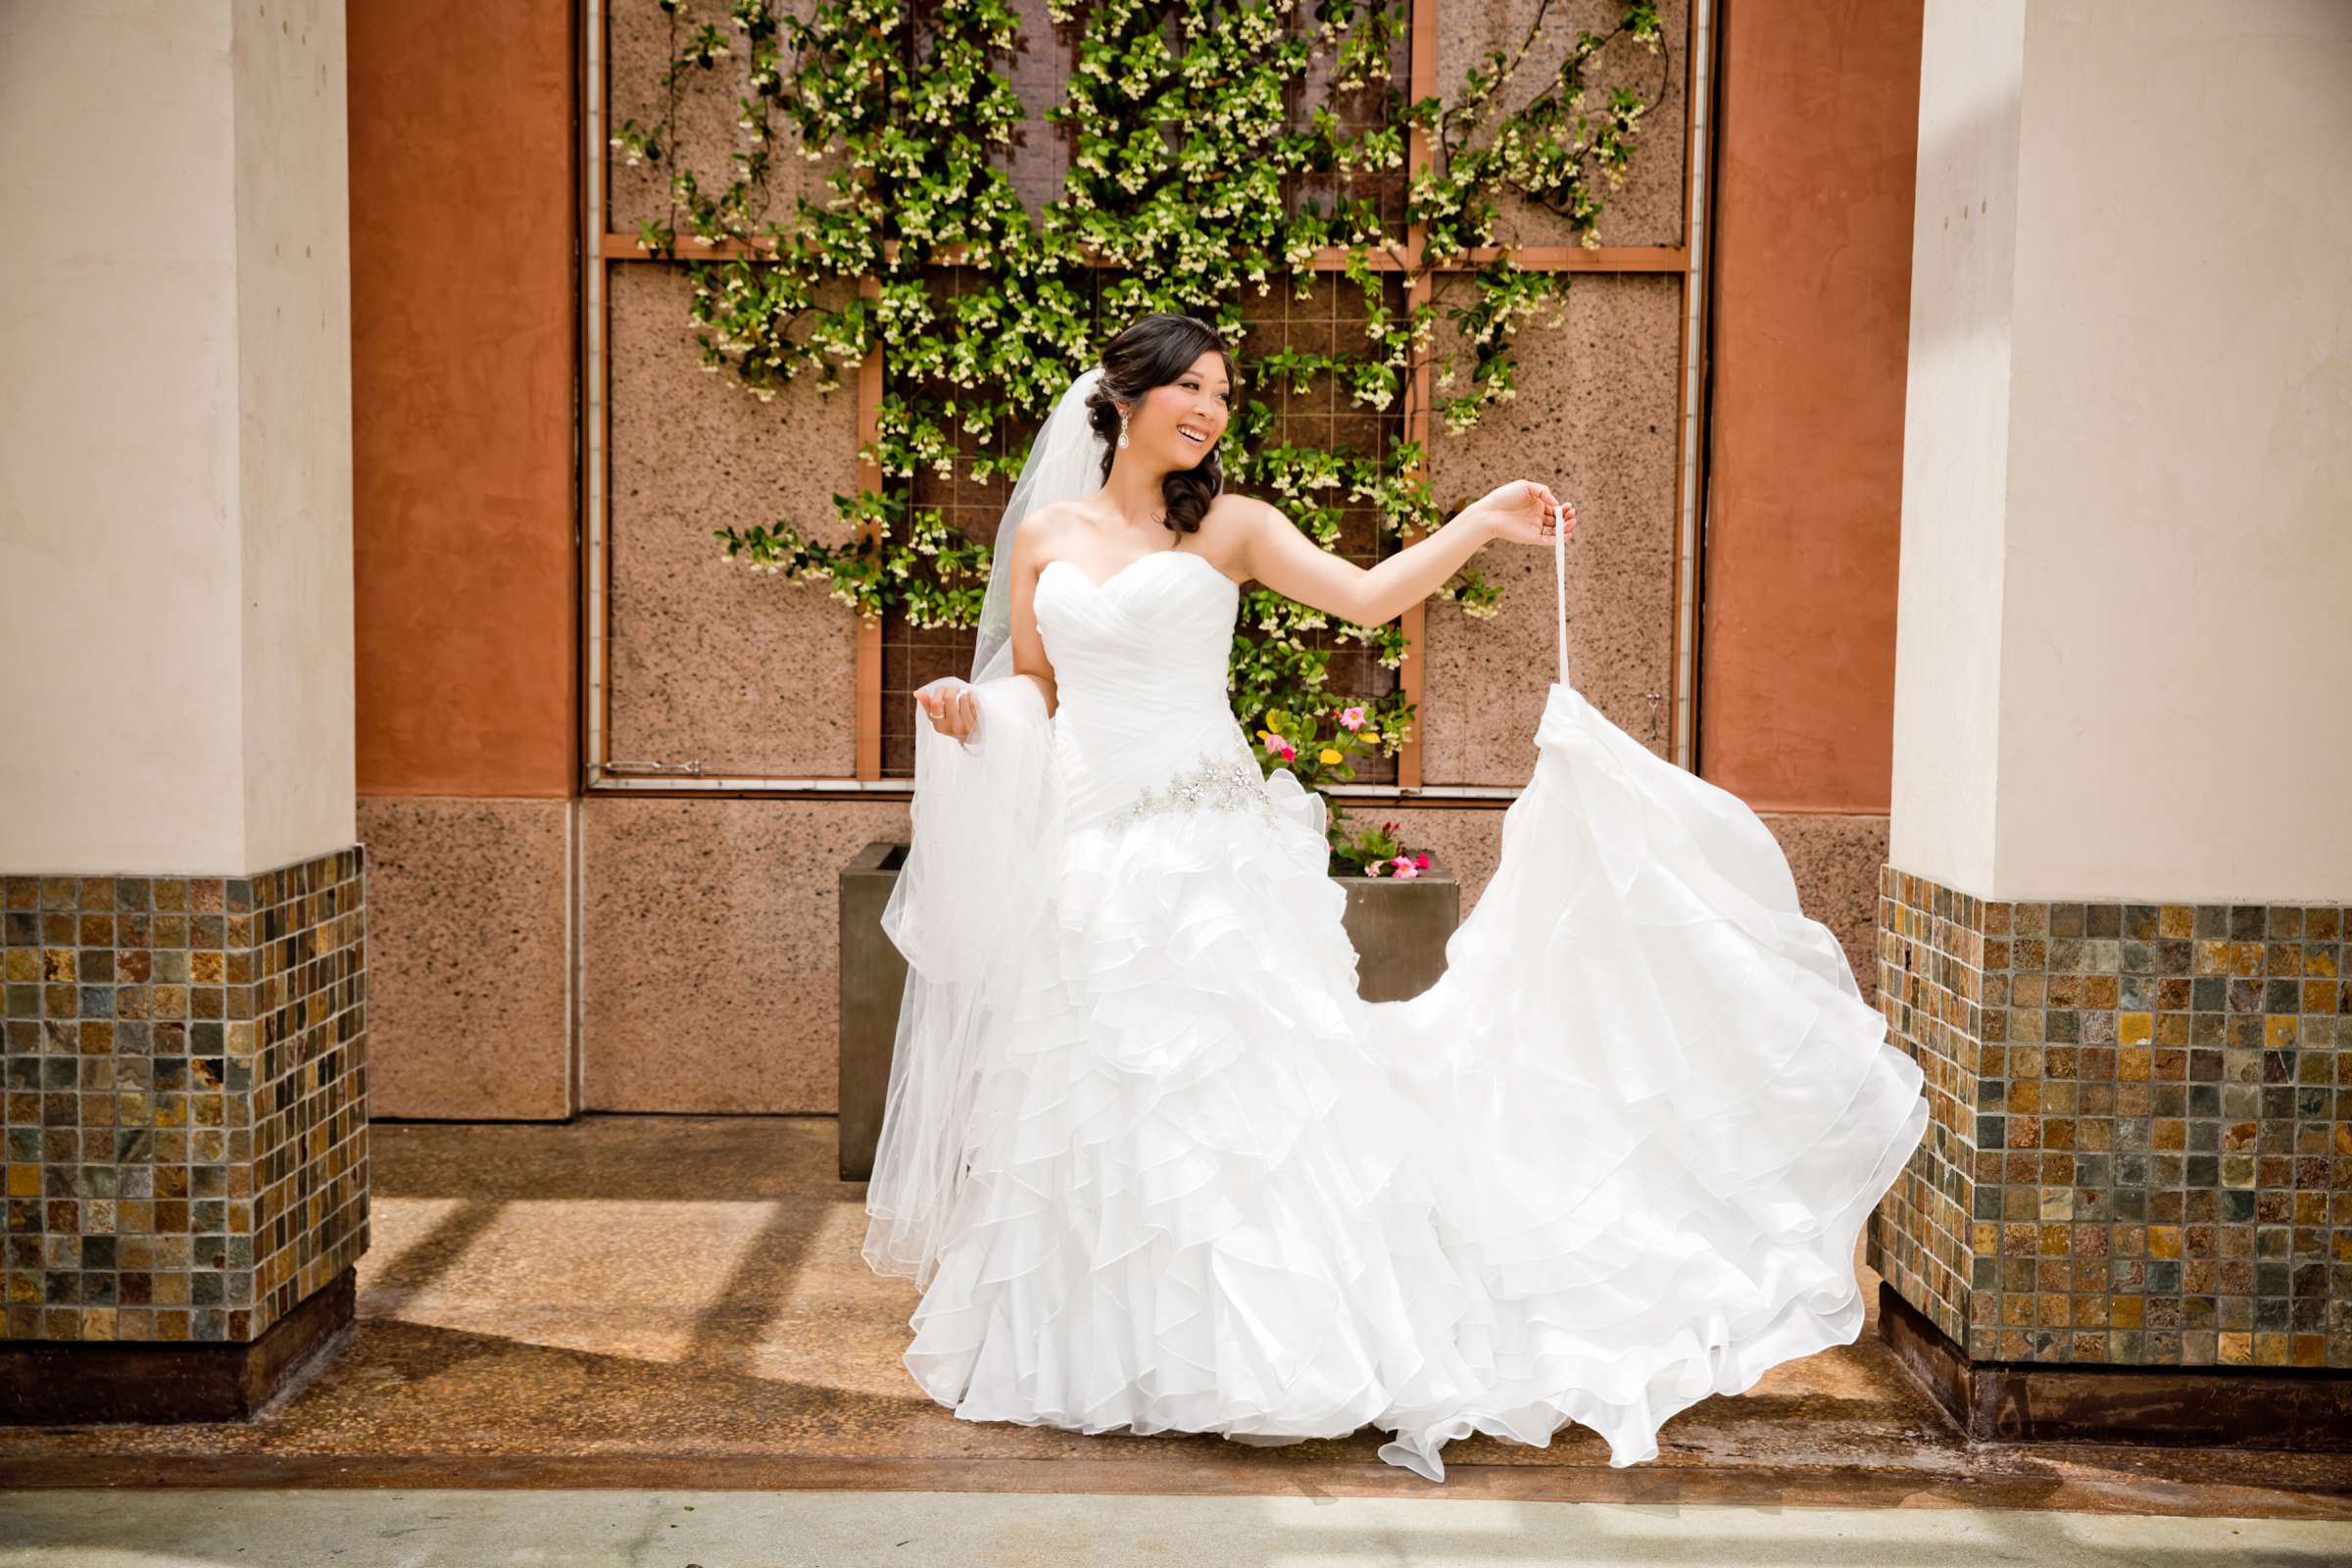 Hilton La Jolla Torrey Pines Wedding coordinated by Lavish Weddings, Muriel and Michael Wedding Photo #11 by True Photography